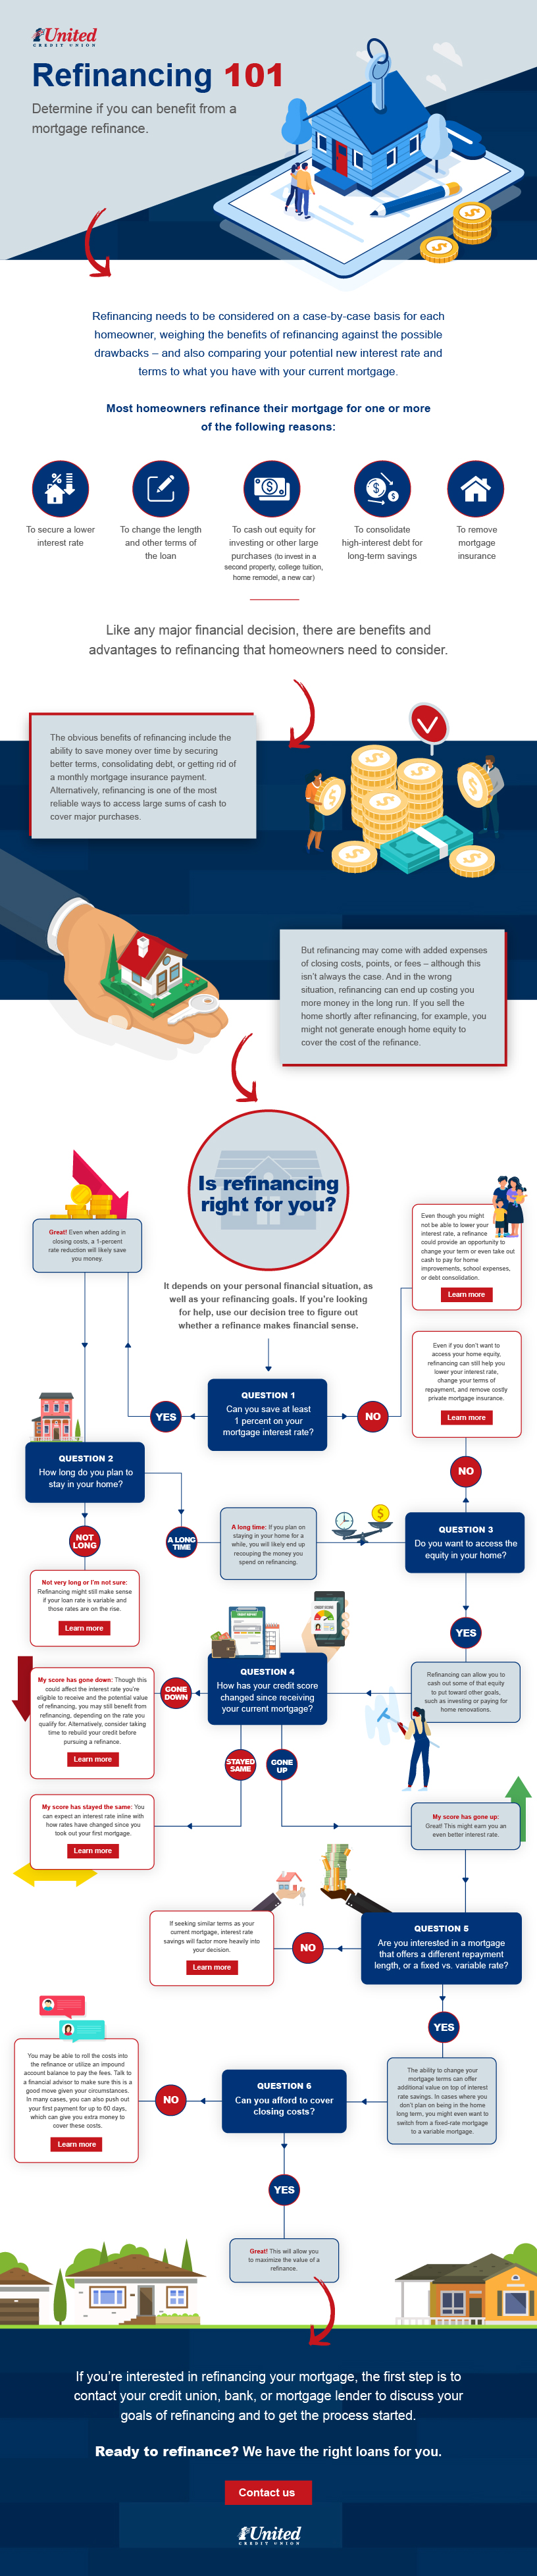 Mortgage refinance infographic